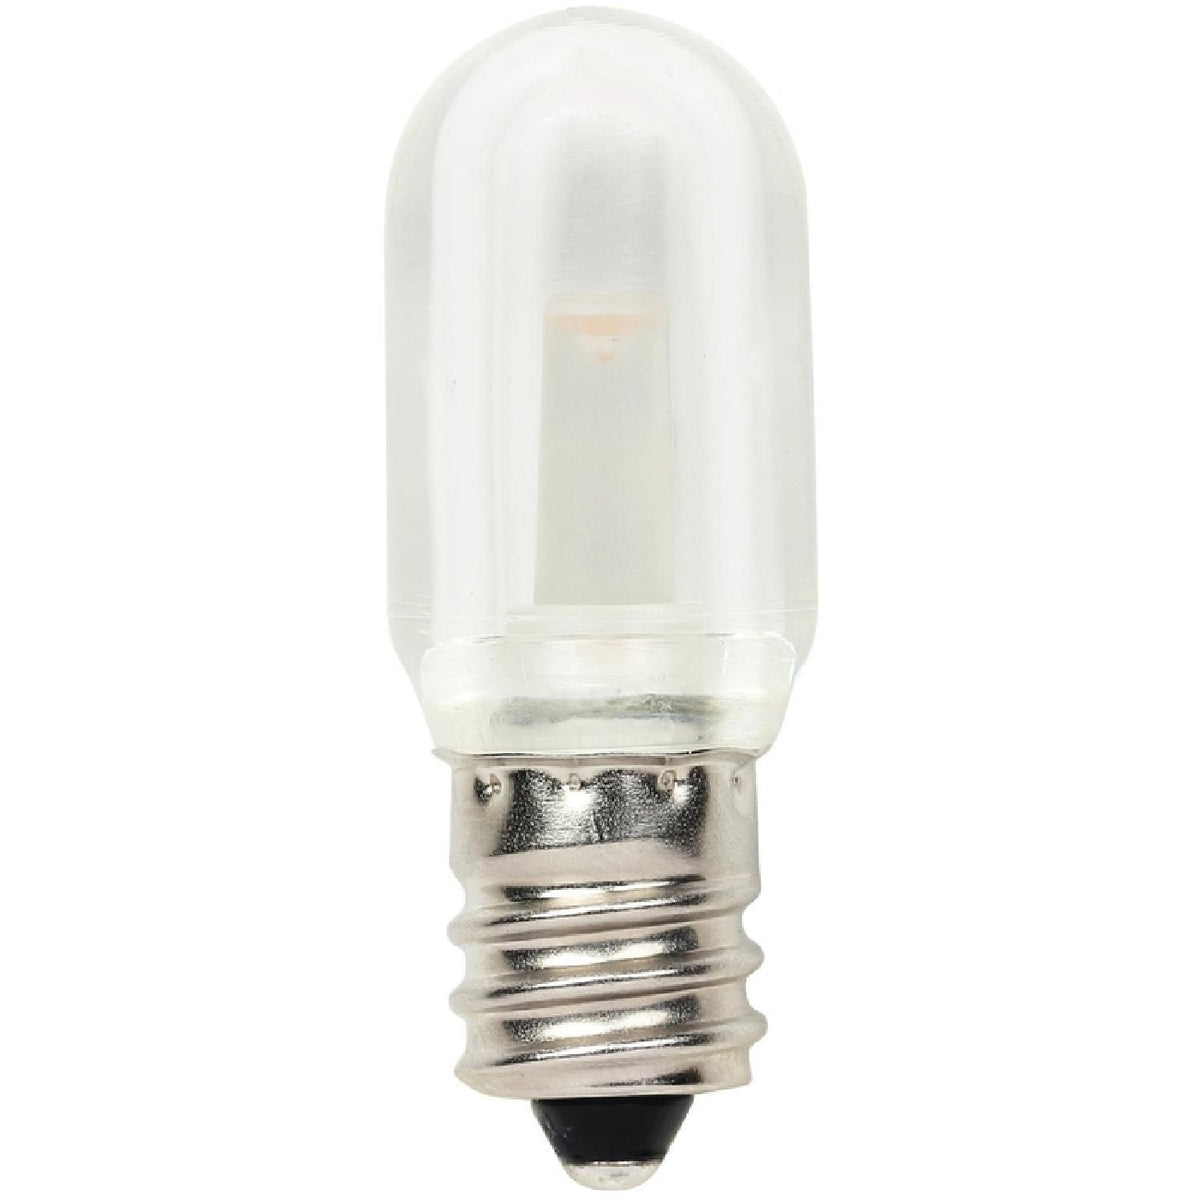 Westinghouse 0511800 10W Equivalent Soft White T7 LED Light Bulb, 2700 K